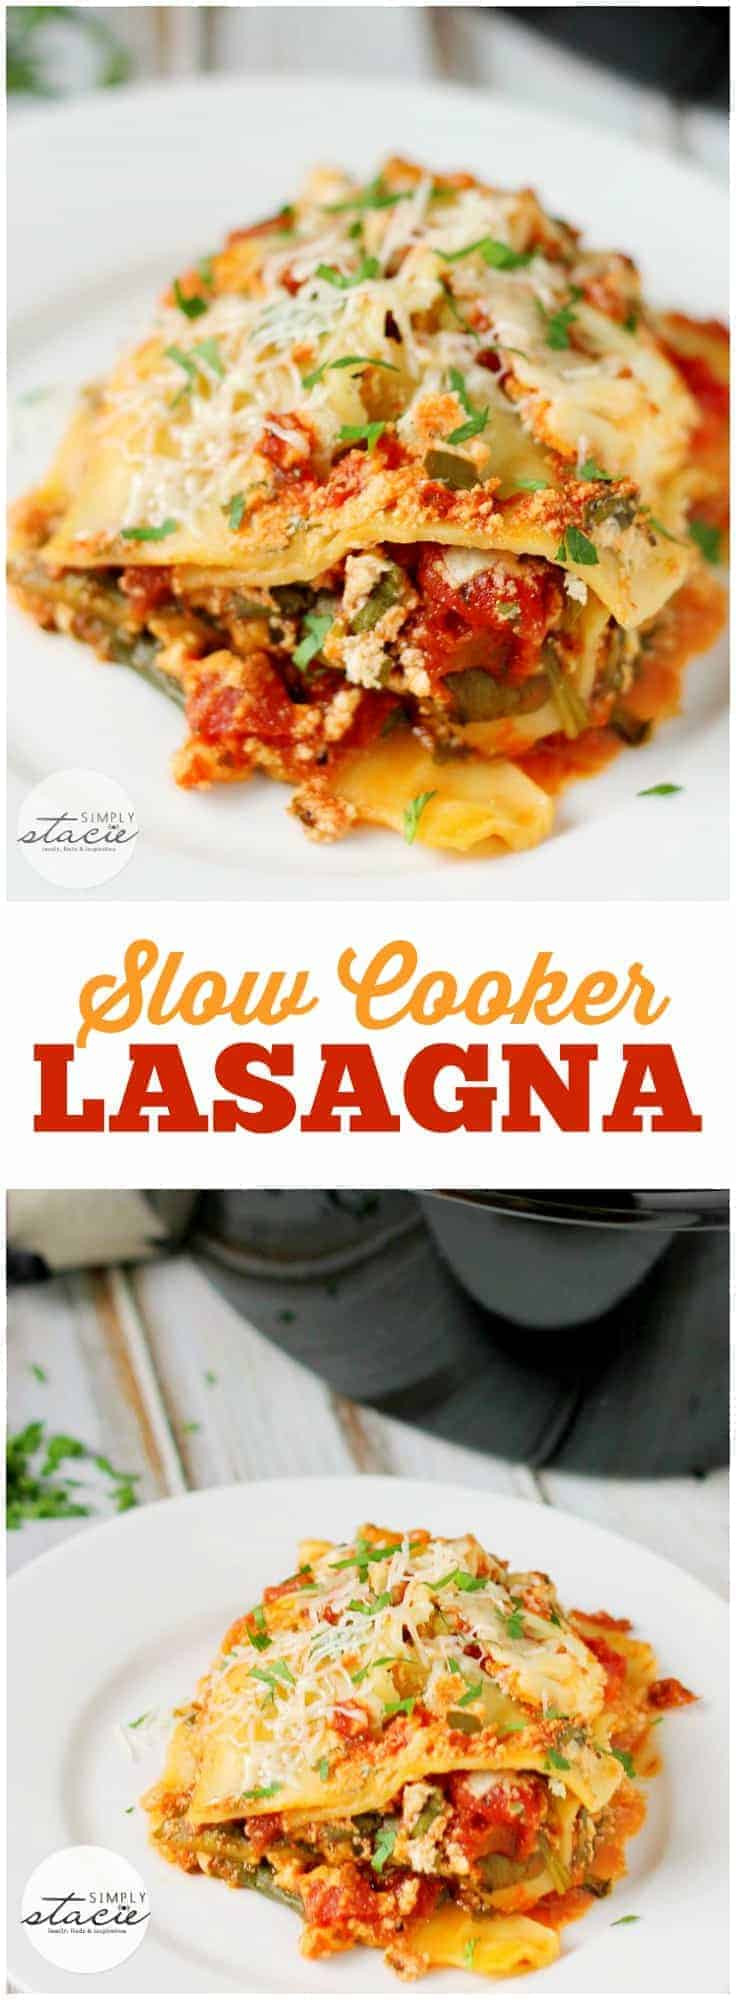 Lasagna Slow Cooker
 Slow Cooker Lasagna Simply Stacie